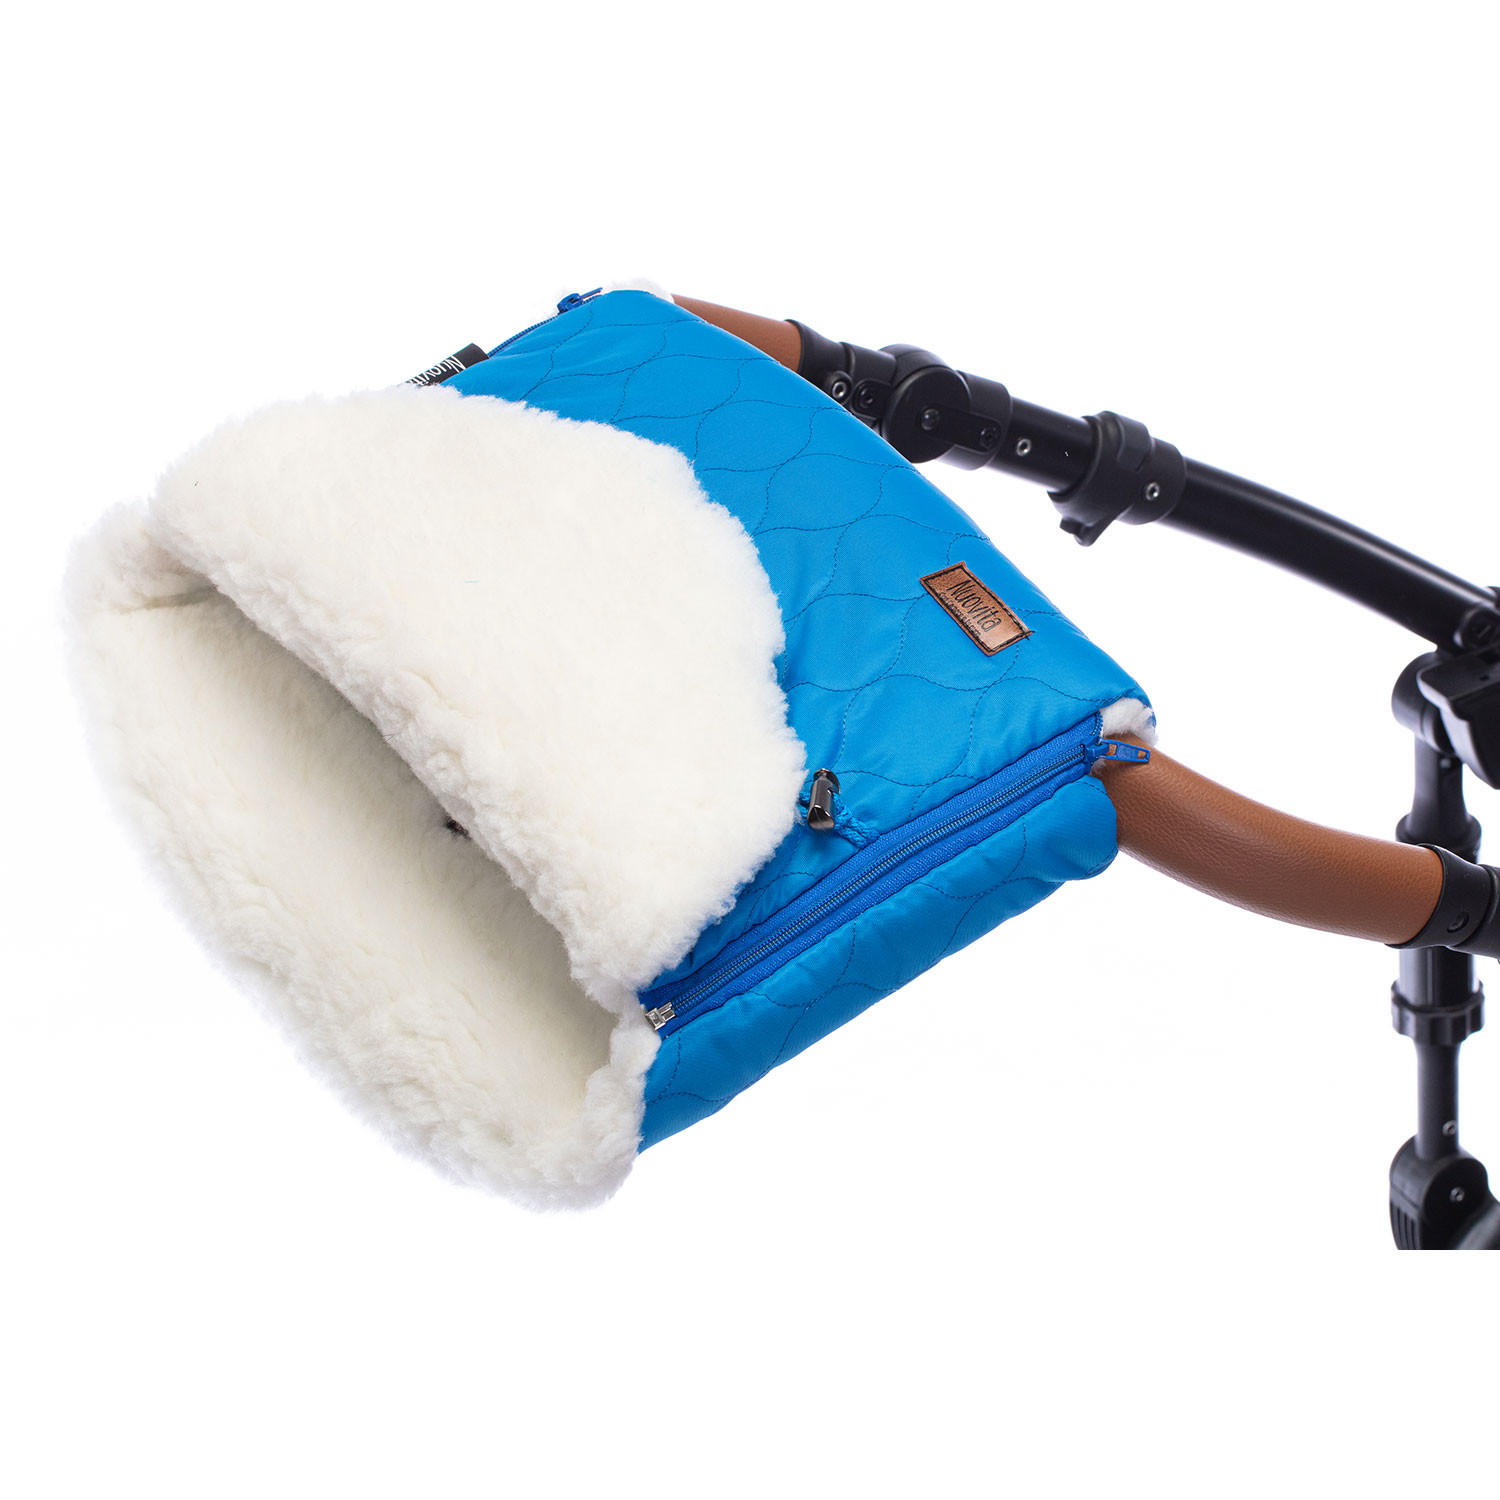 Муфта меховая для коляски Nuovita Polare Bianco